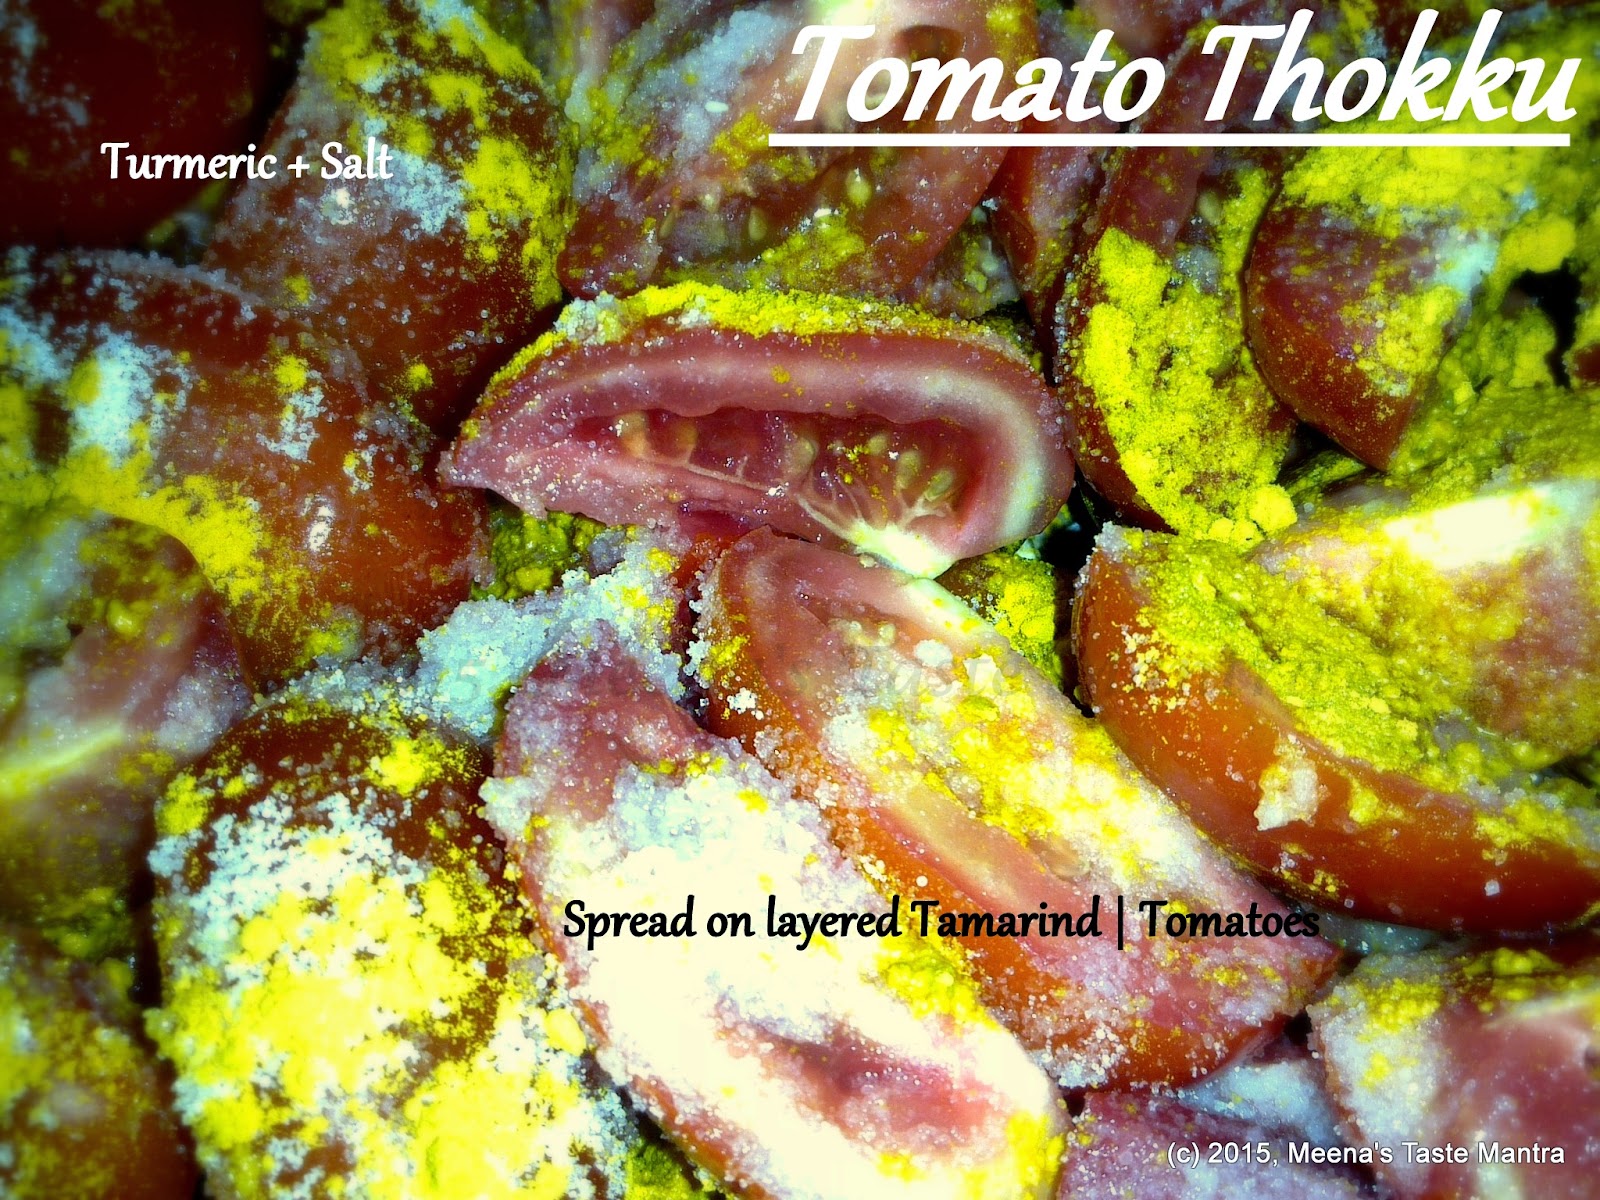 Tomato Thokku - Turmeric and Salt spread